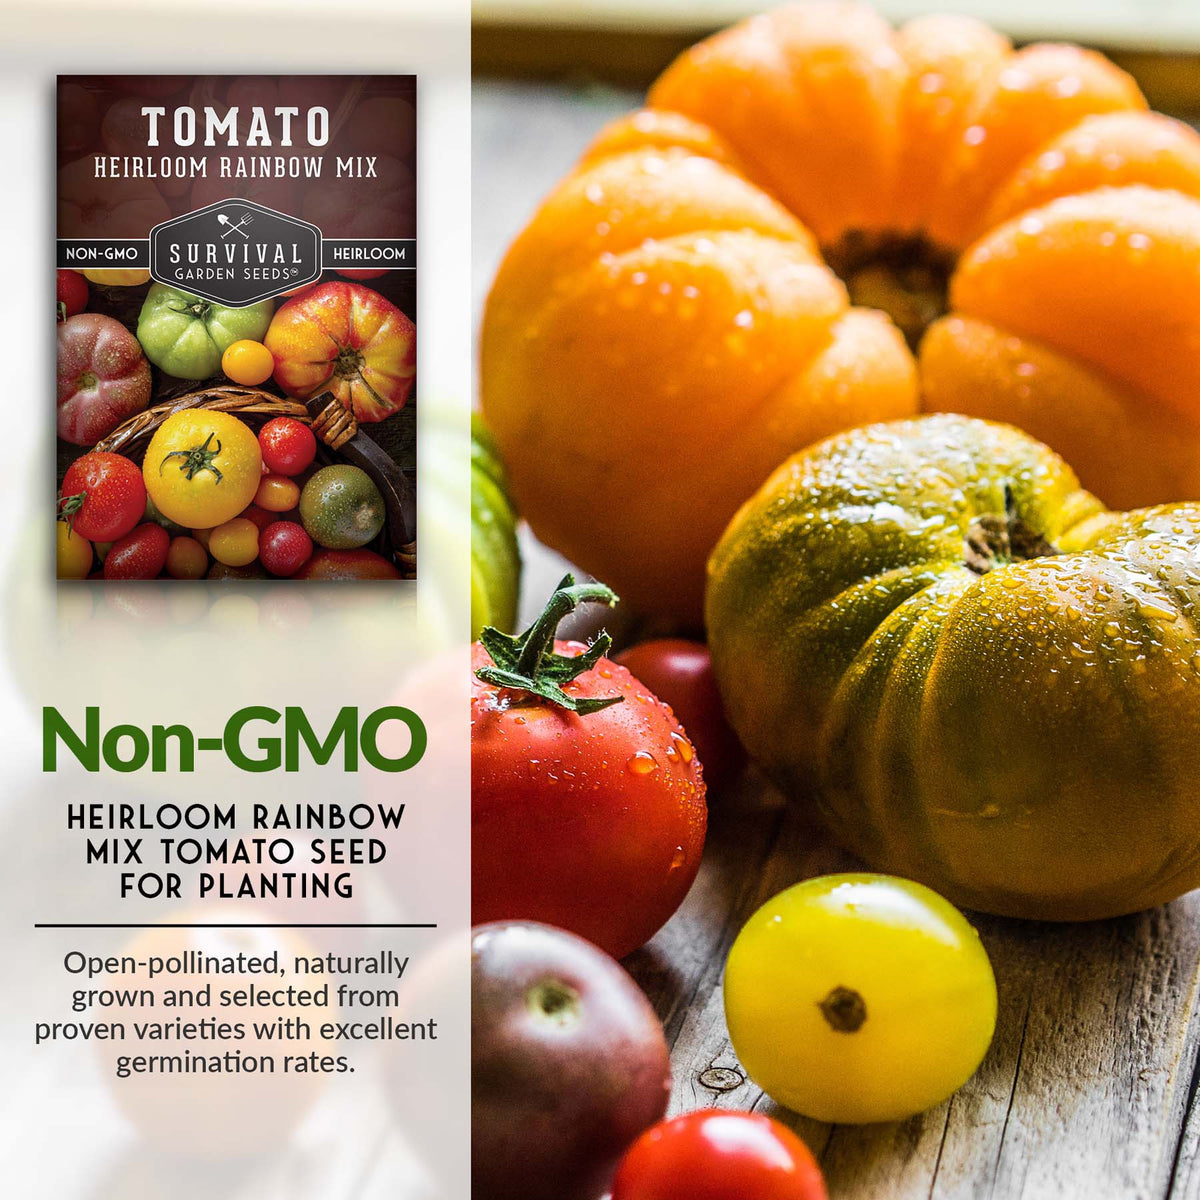 Heirloom rainbow mix tomato seeds are non-GMO